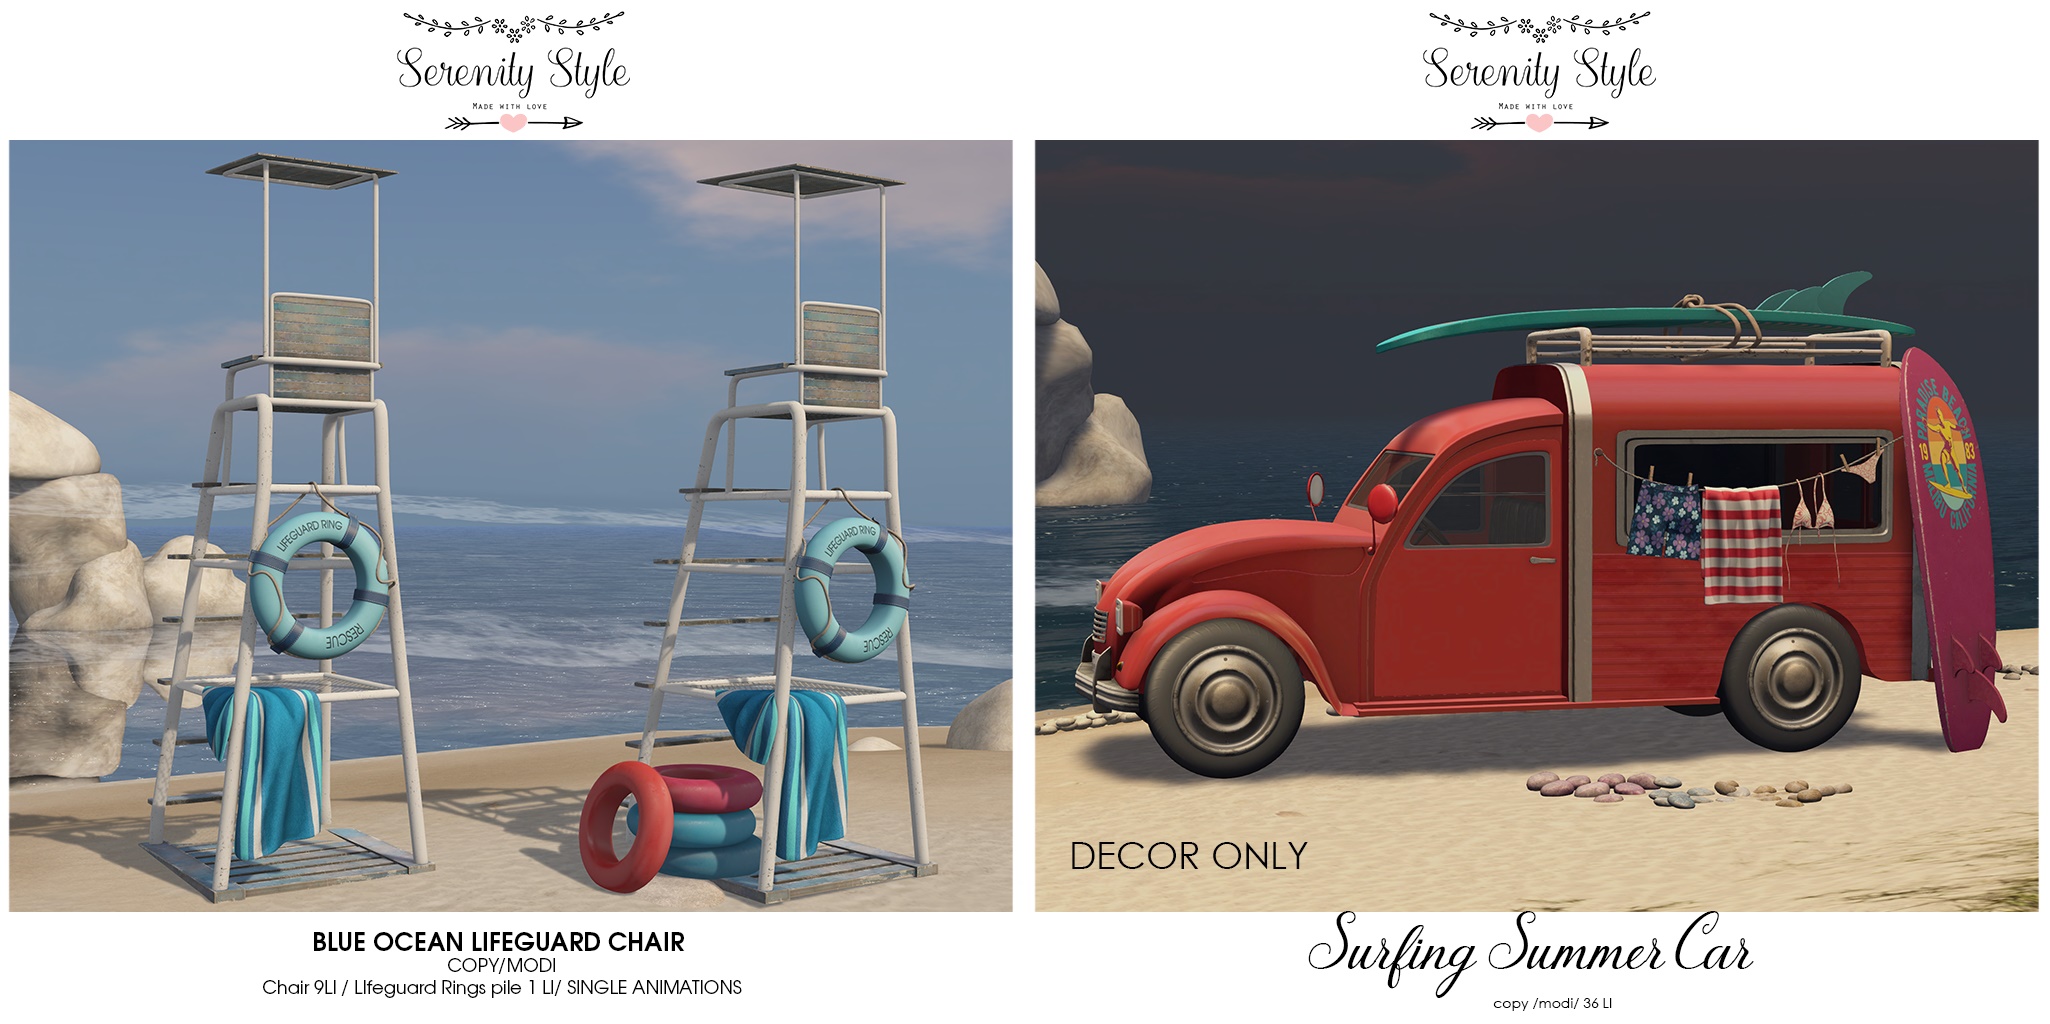 Serenity Style – Blue Ocean Lifeguard Chair & Surfing Summer Car